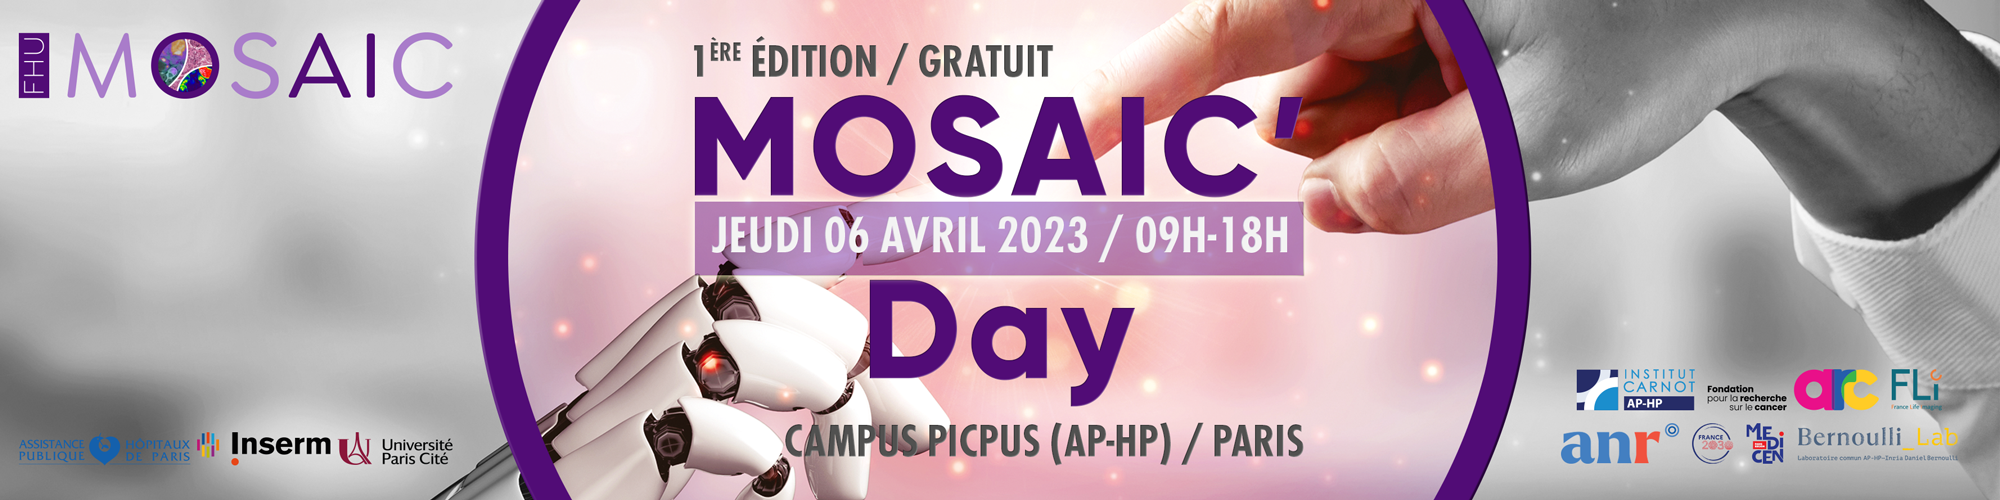 MOSAIC' Day - 6 avril 2023 - Paris